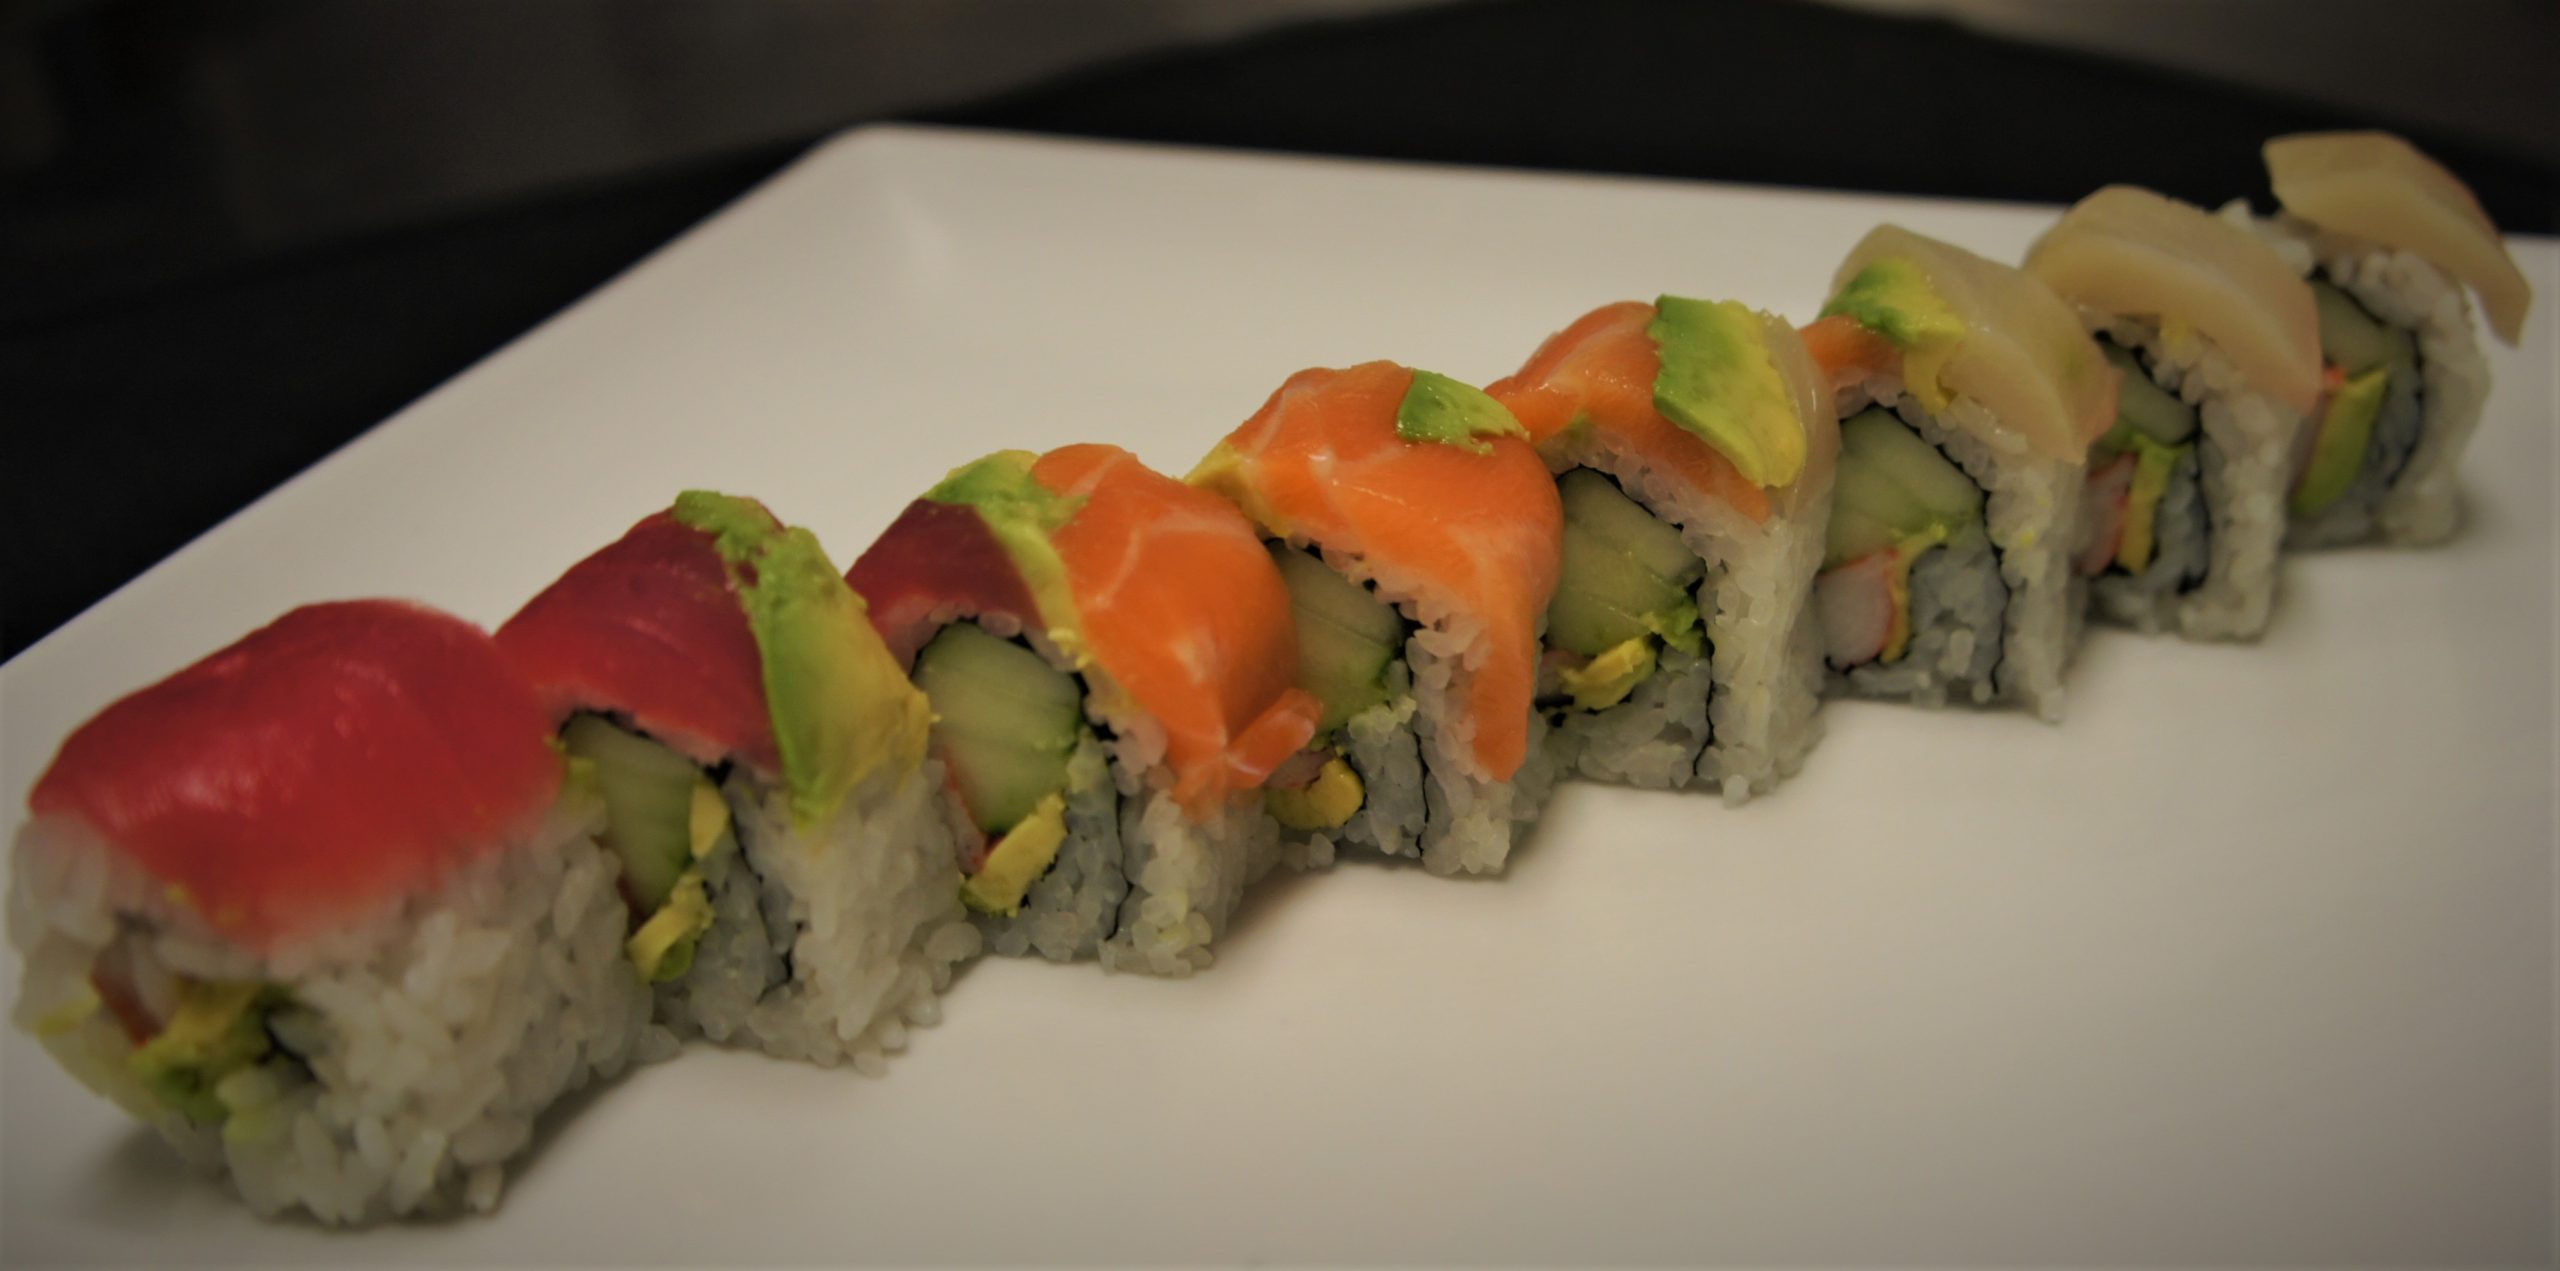 Best Rainbow Roll Recipe - How To Make Rainbow Roll Sushi